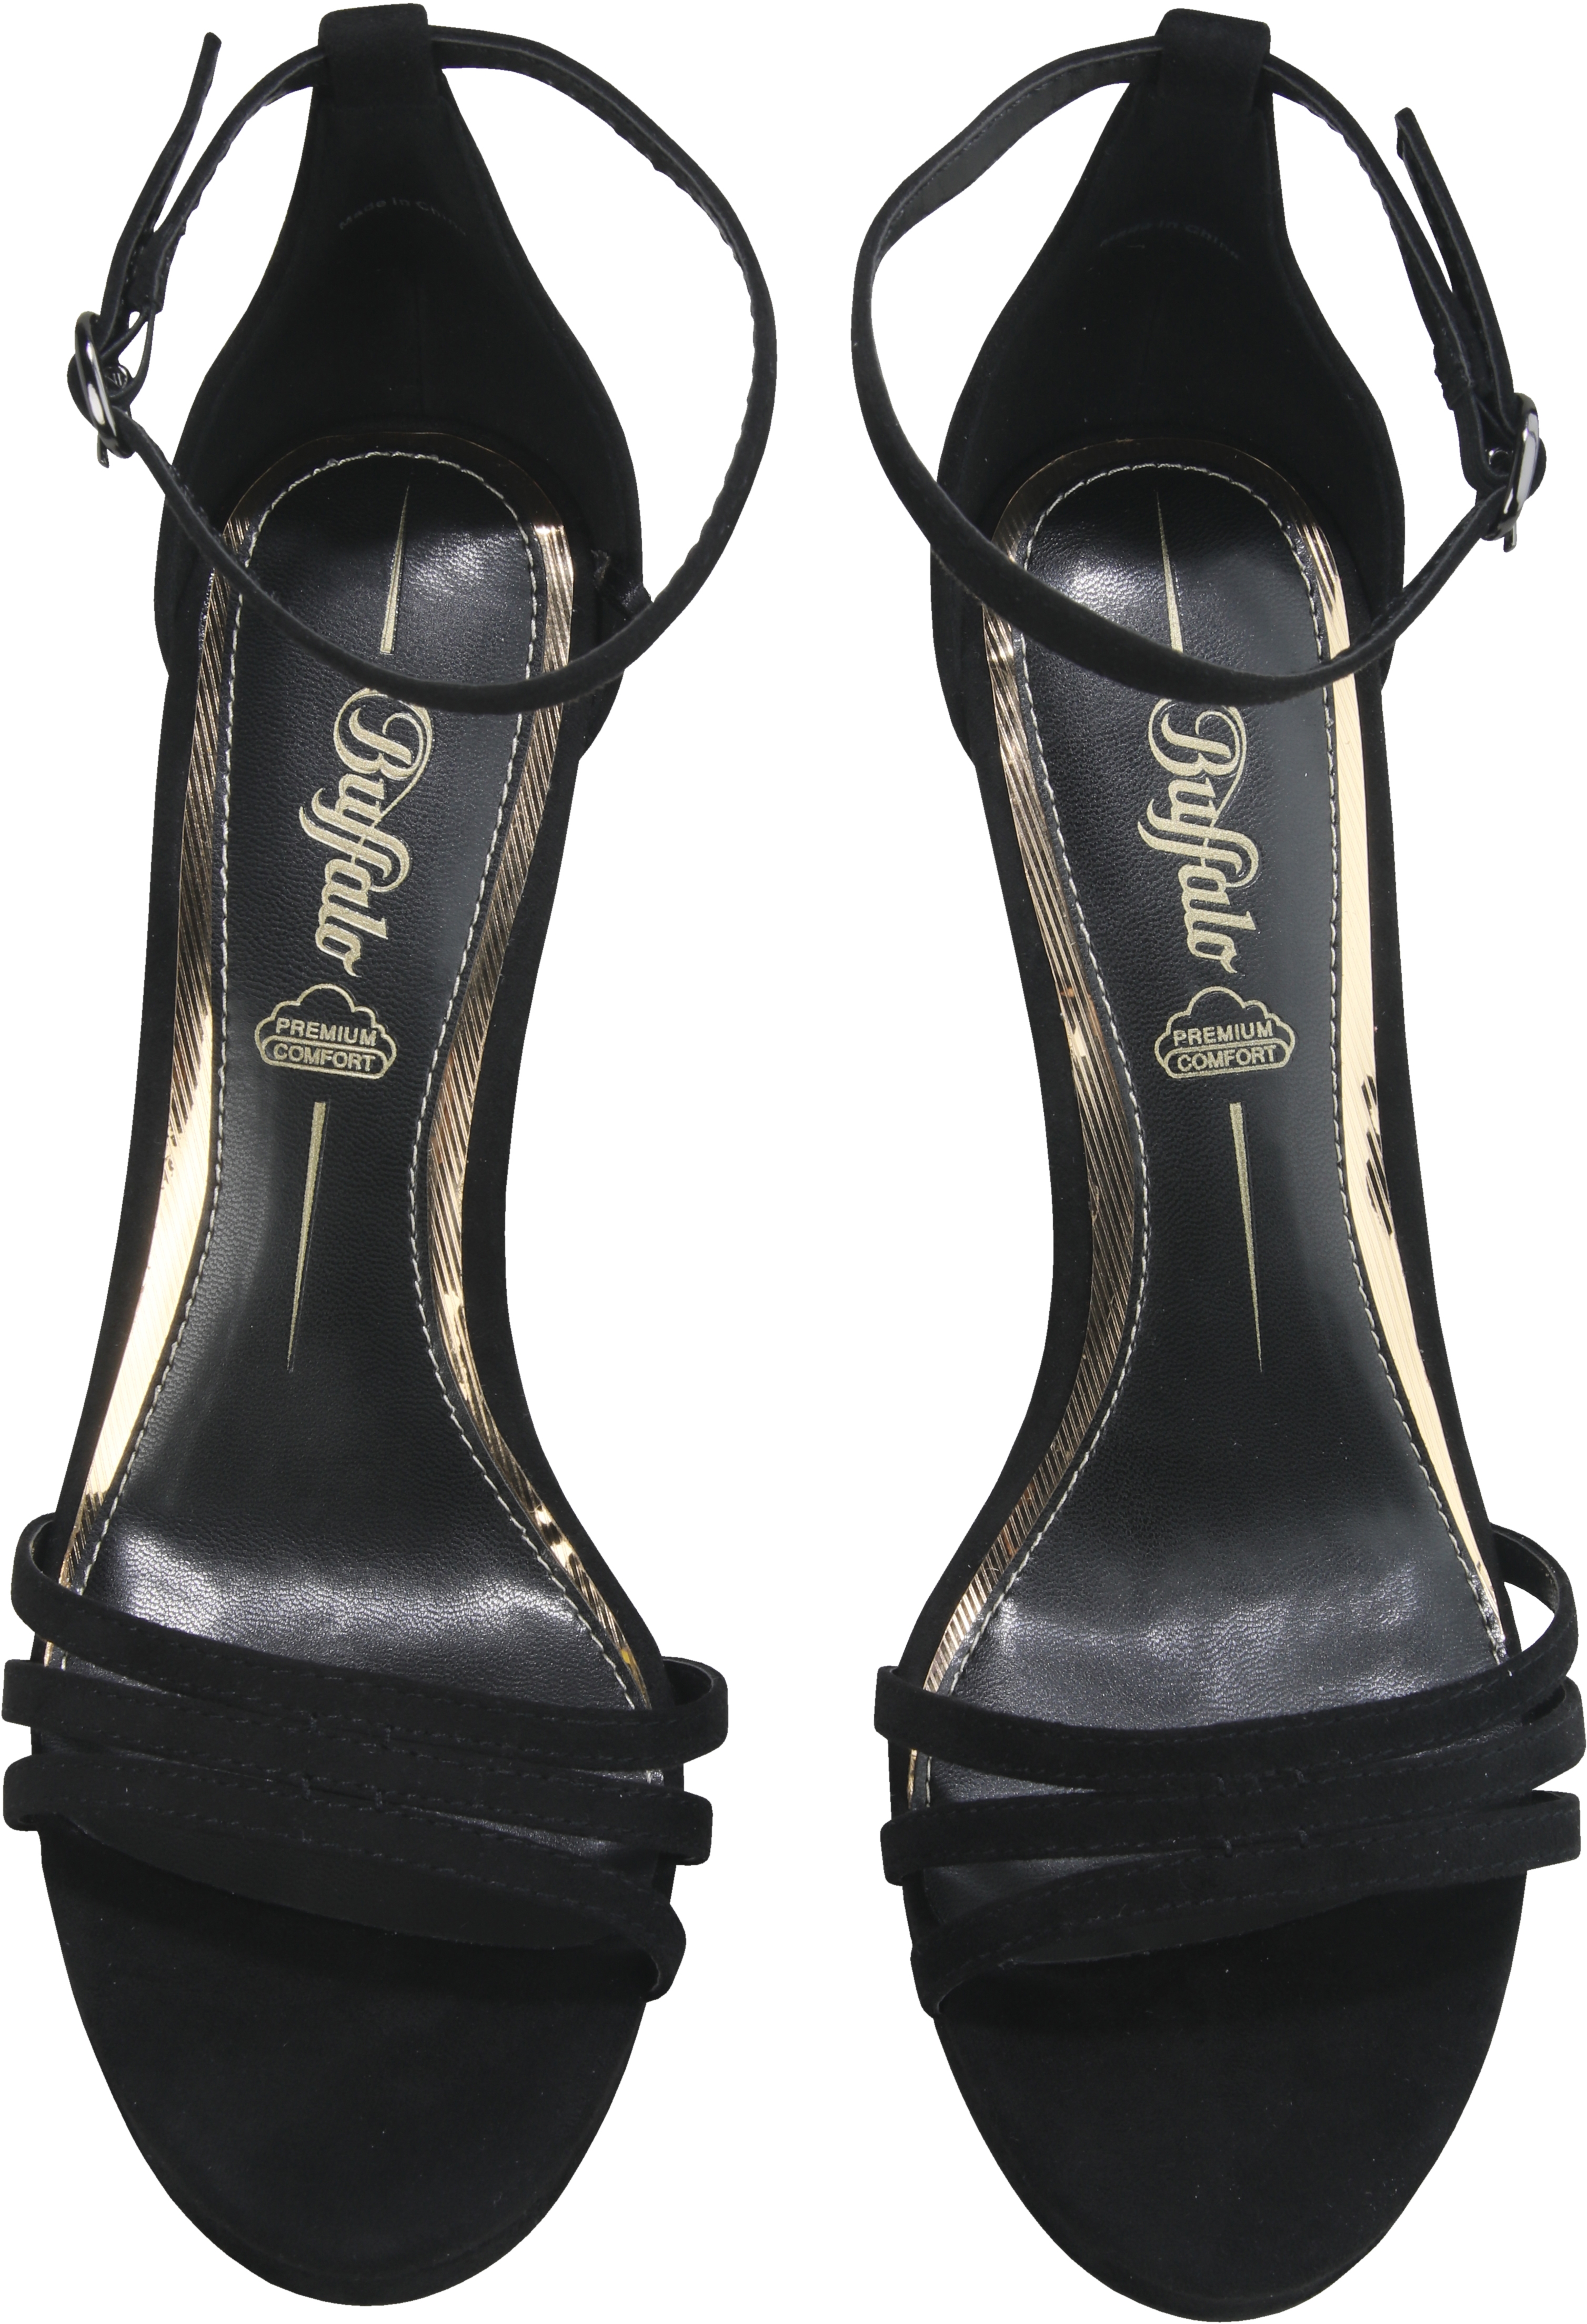 Buffalo Melissa 2 - Sandal Heel - Imi Suede - Black Imitation leather